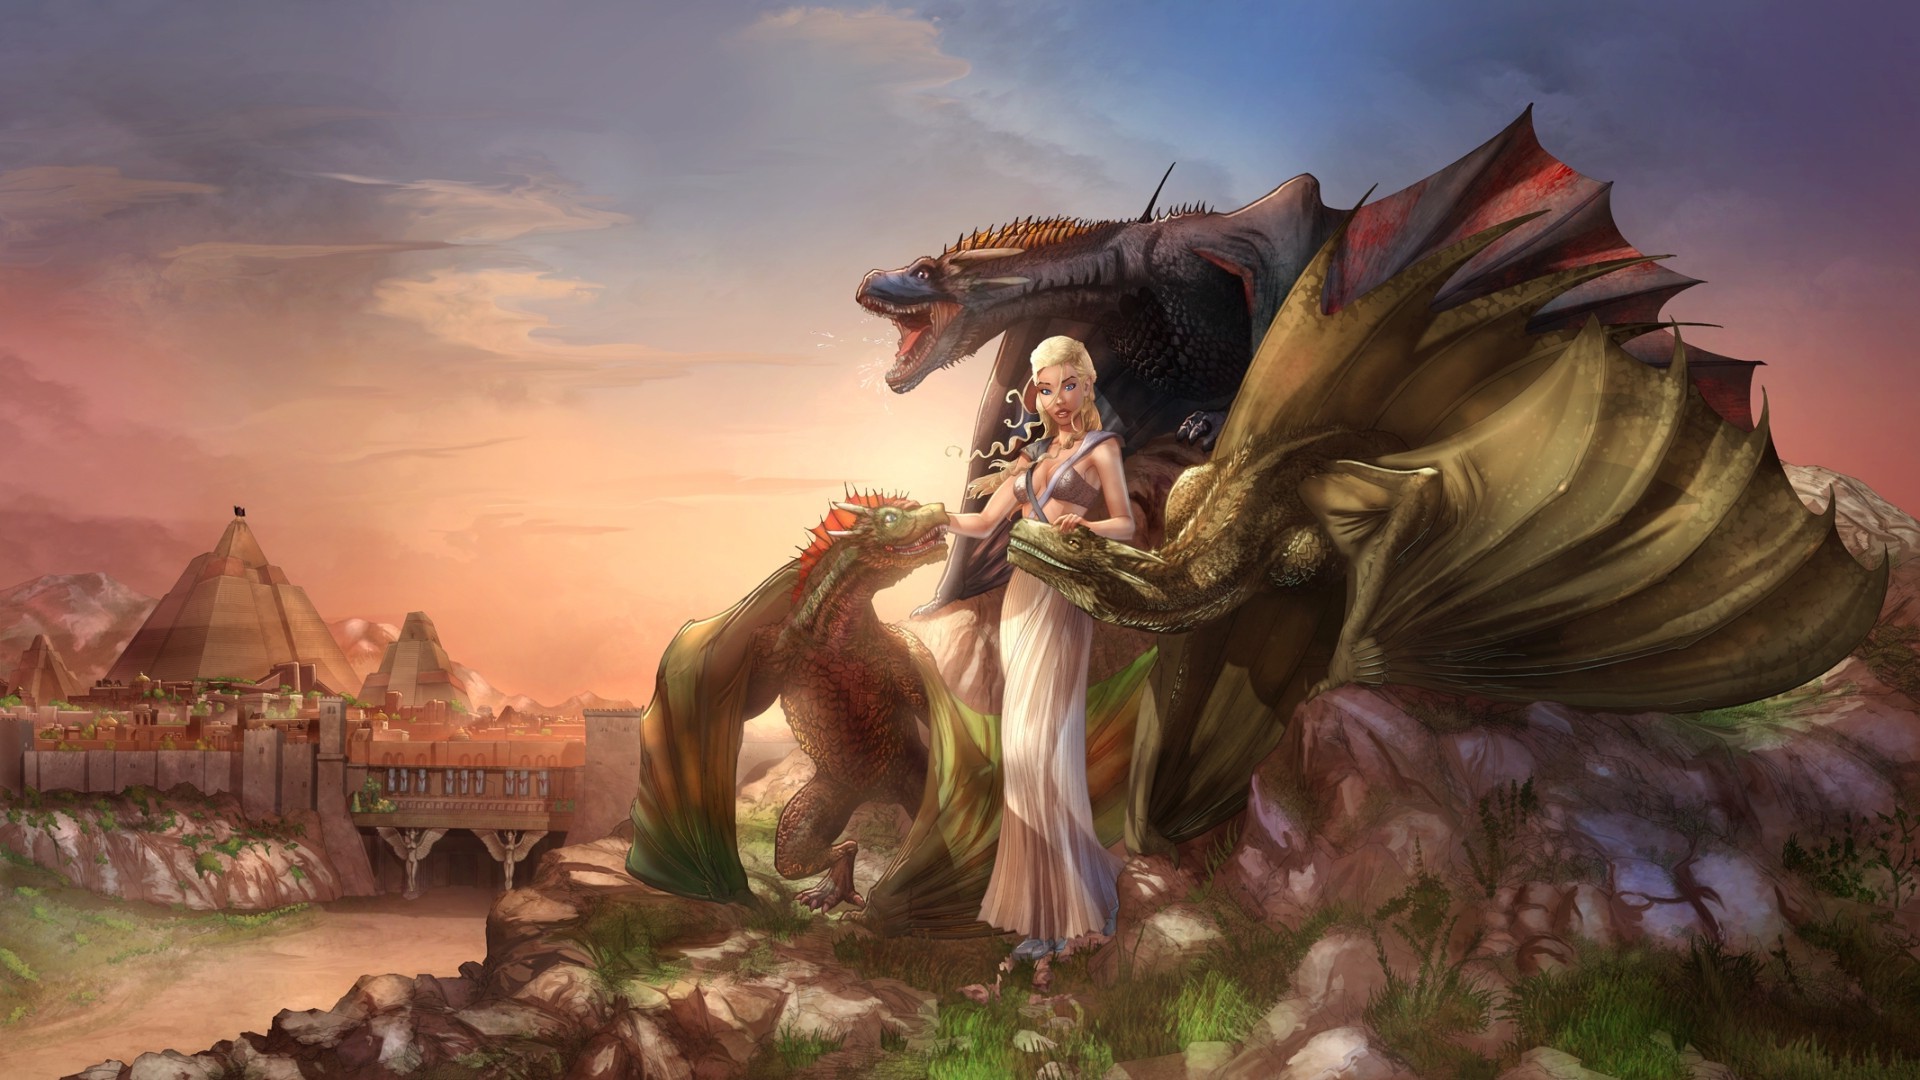 daenerys wallpaper hd,cg artwork,mythology,fictional character,sky,illustration